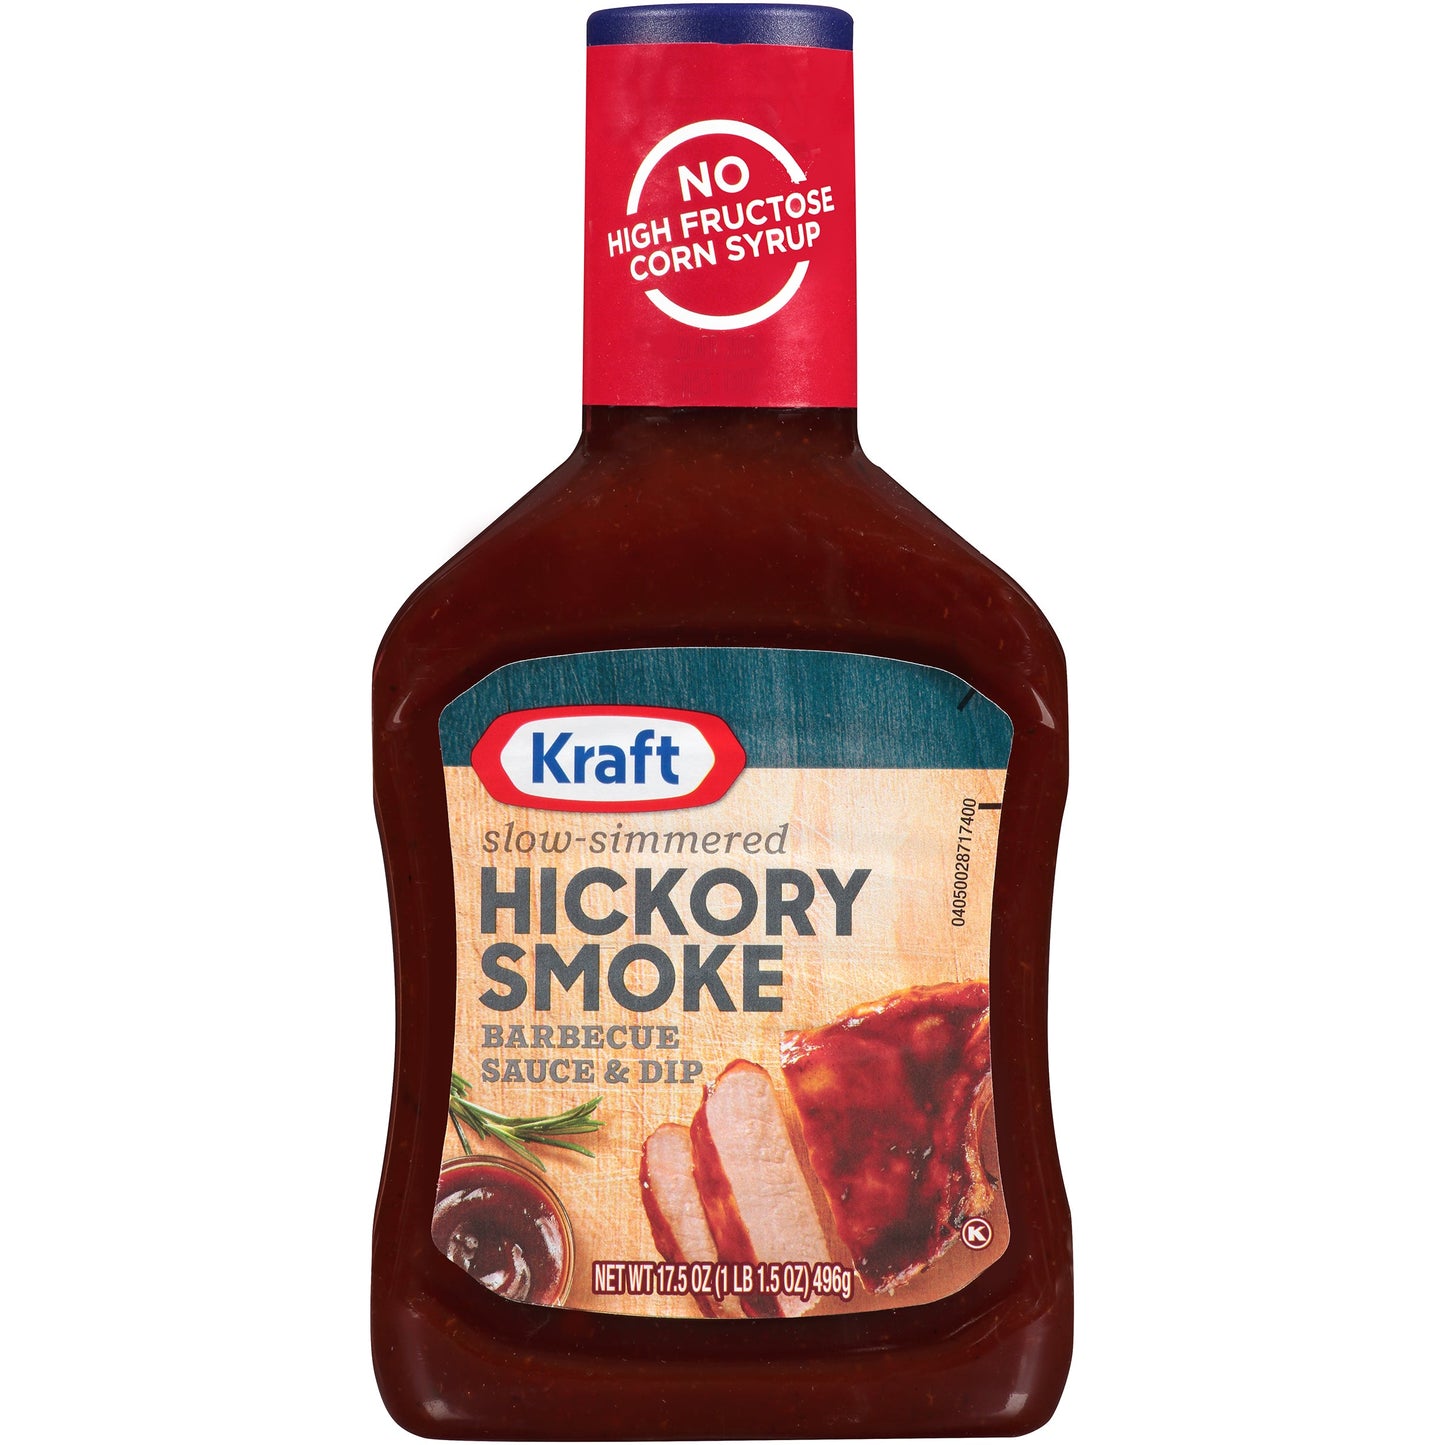 Kraft Slow-Simmered Hickory Smoke BBQ Sauce and Dip BBQ 17.5oz